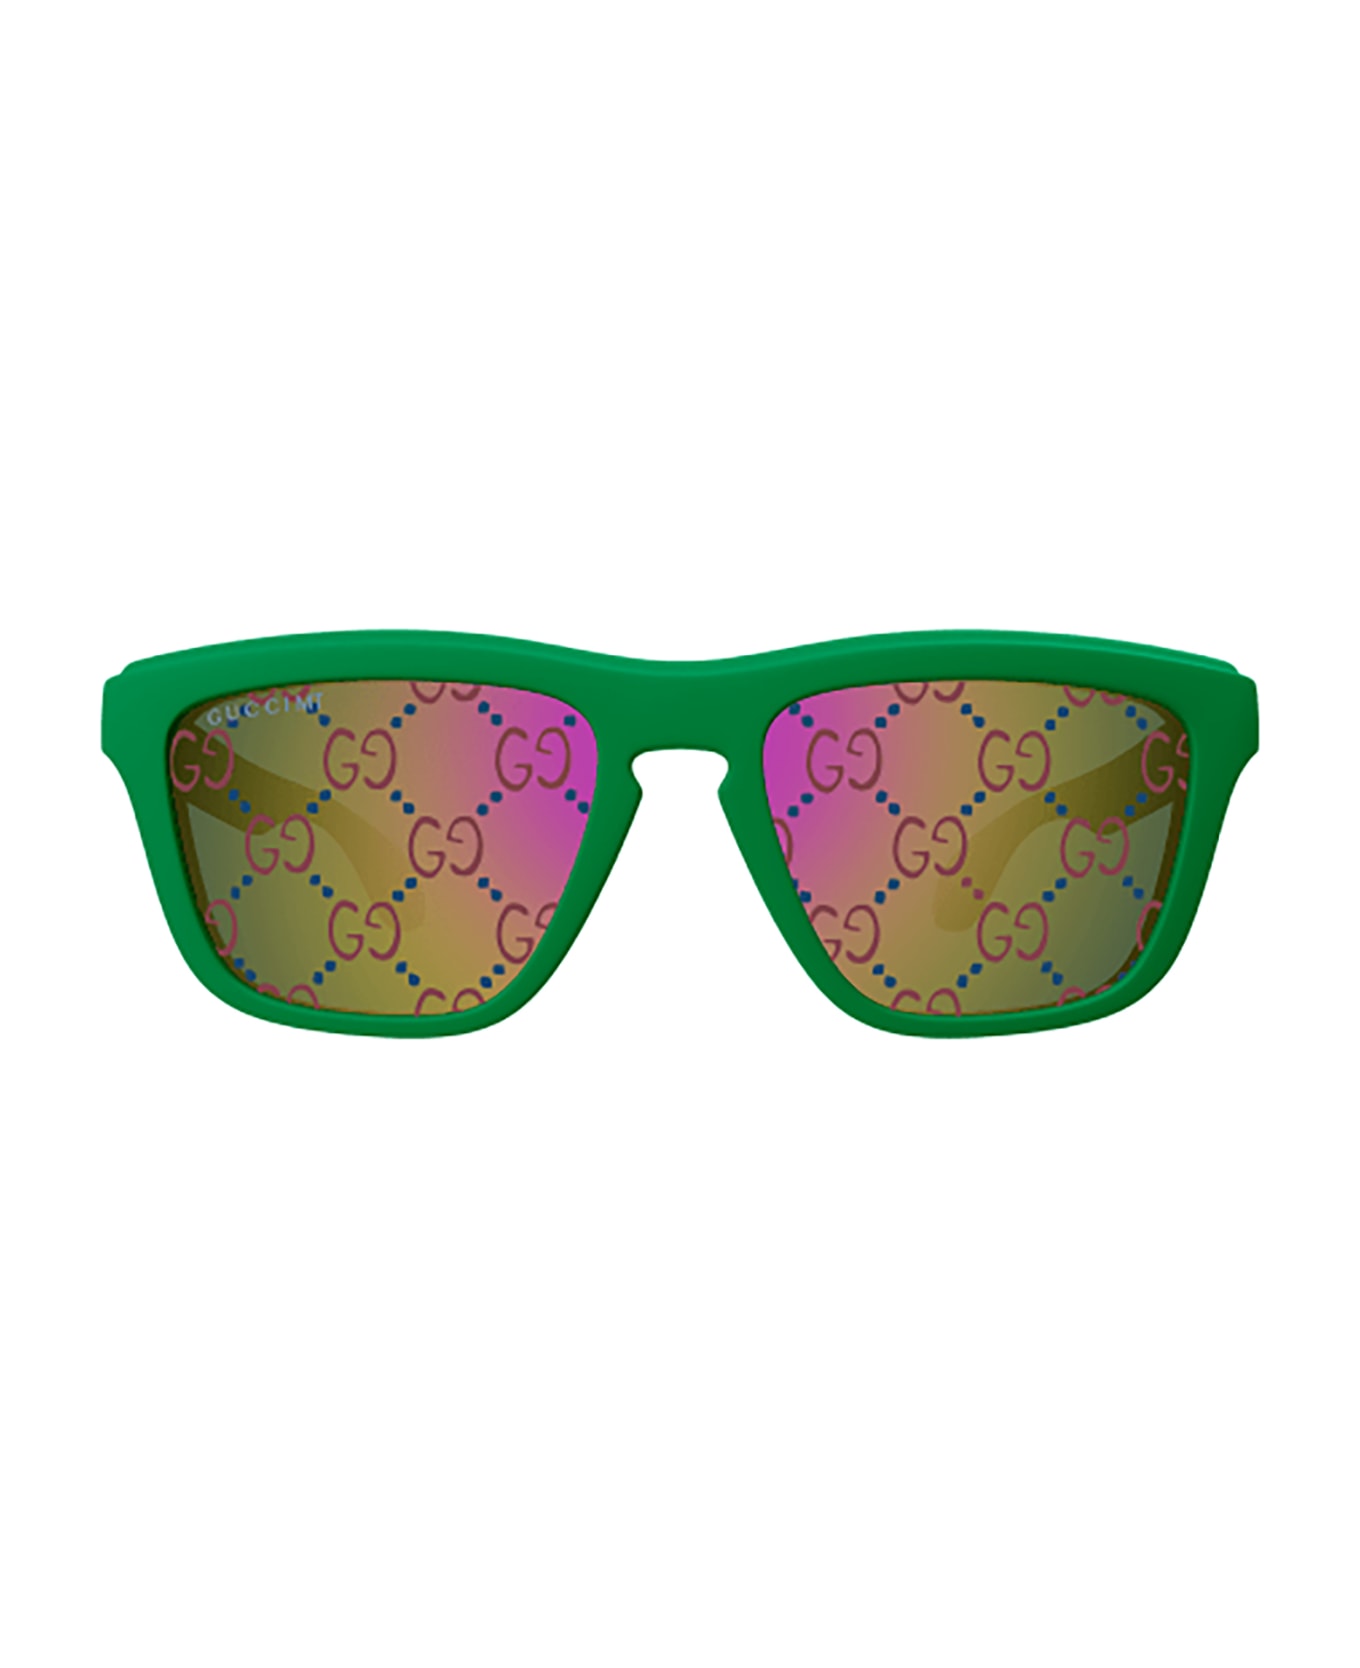 Gucci Eyewear GG1571S Sunglasses - Green Green Blue